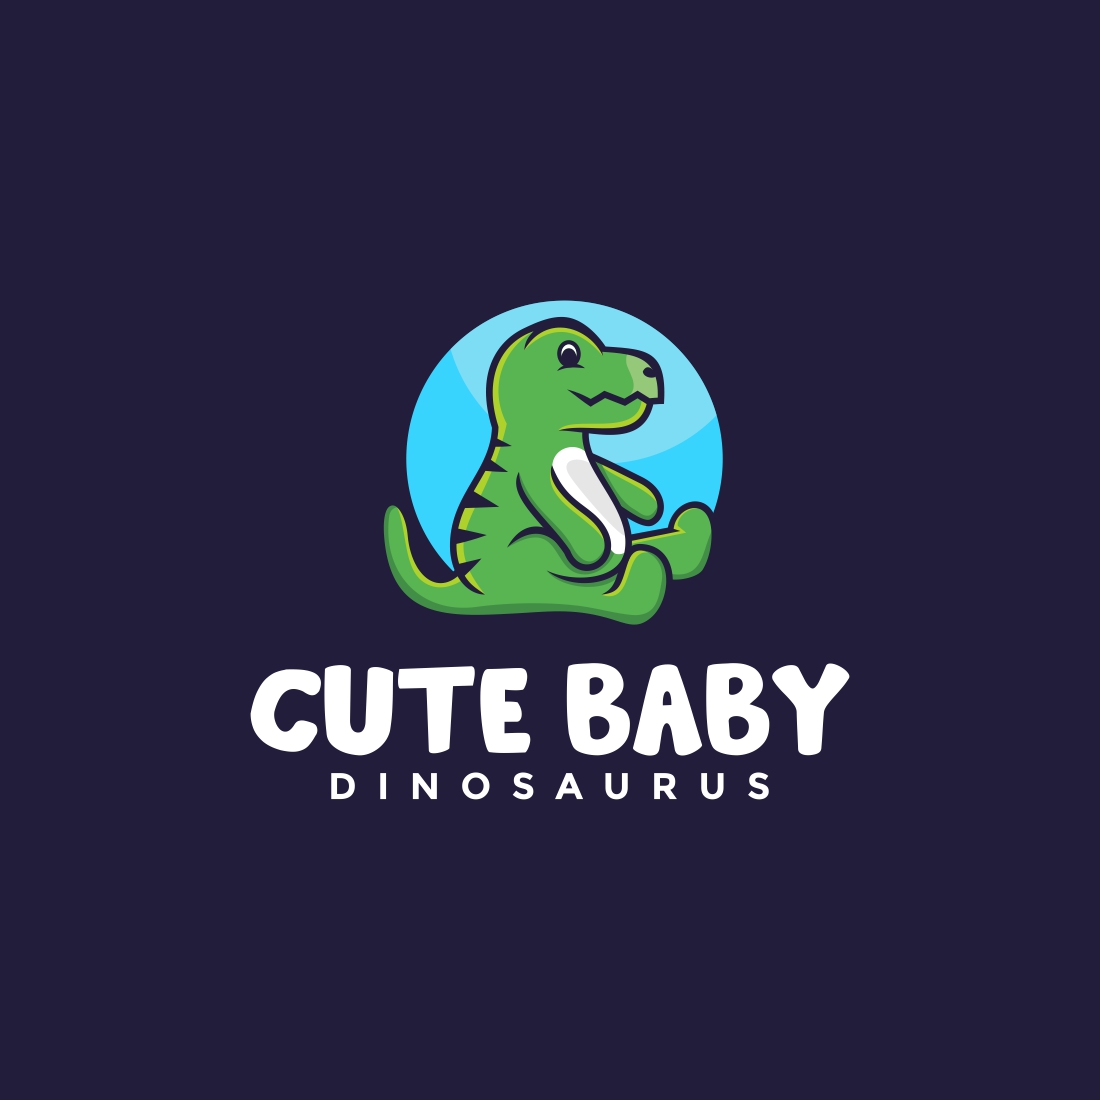 Dinosaur cute logo design preview image.